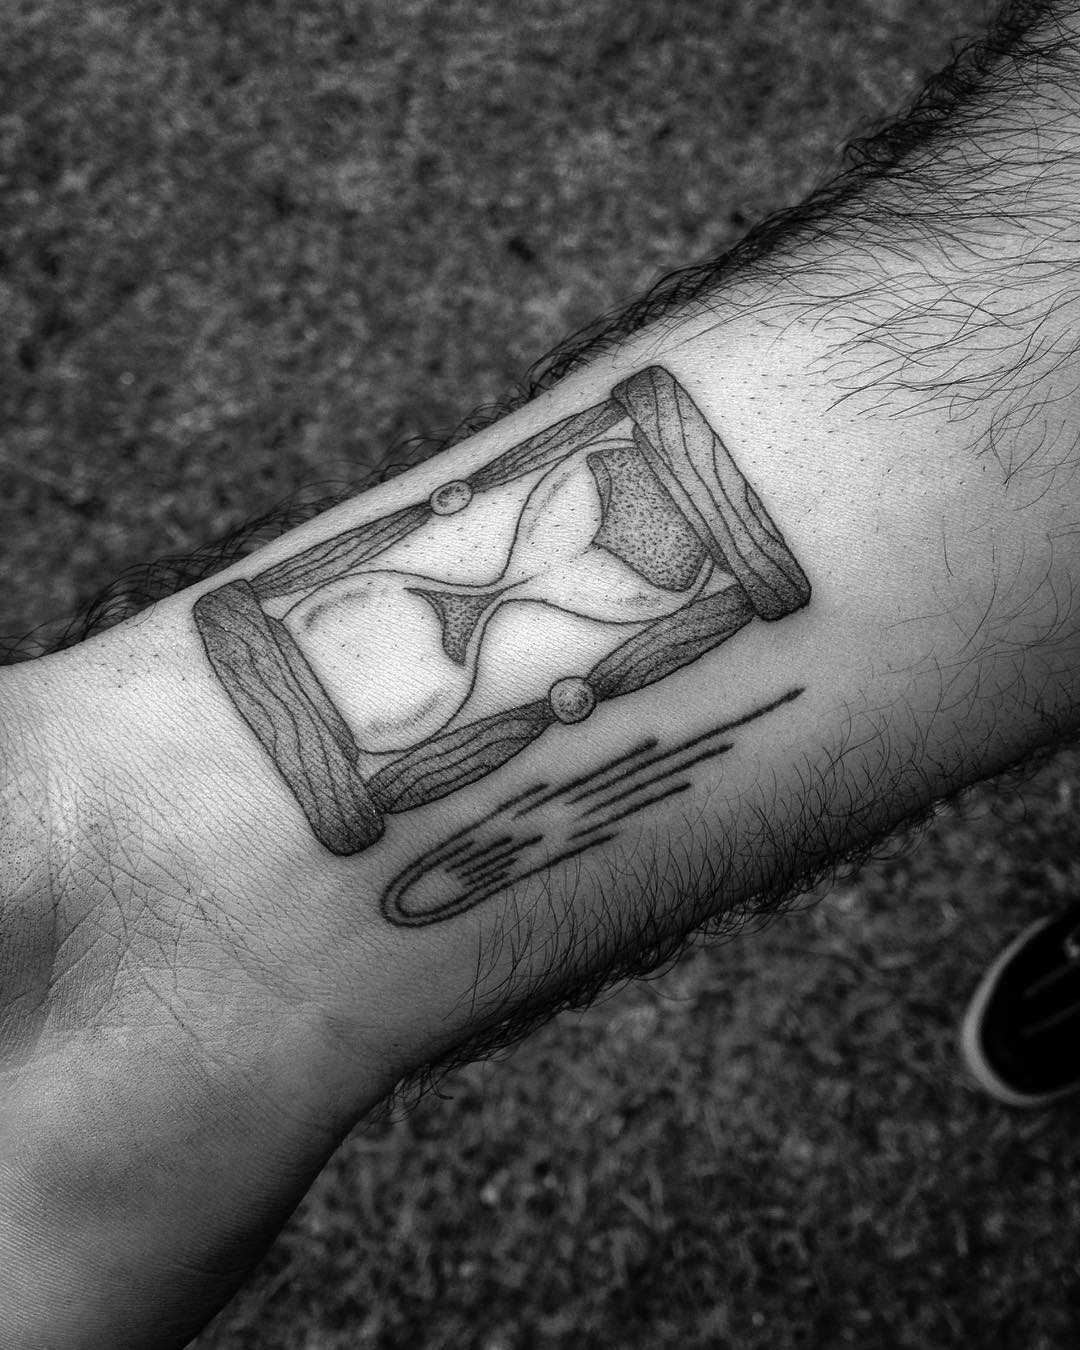 Hourglass and comet tattoo